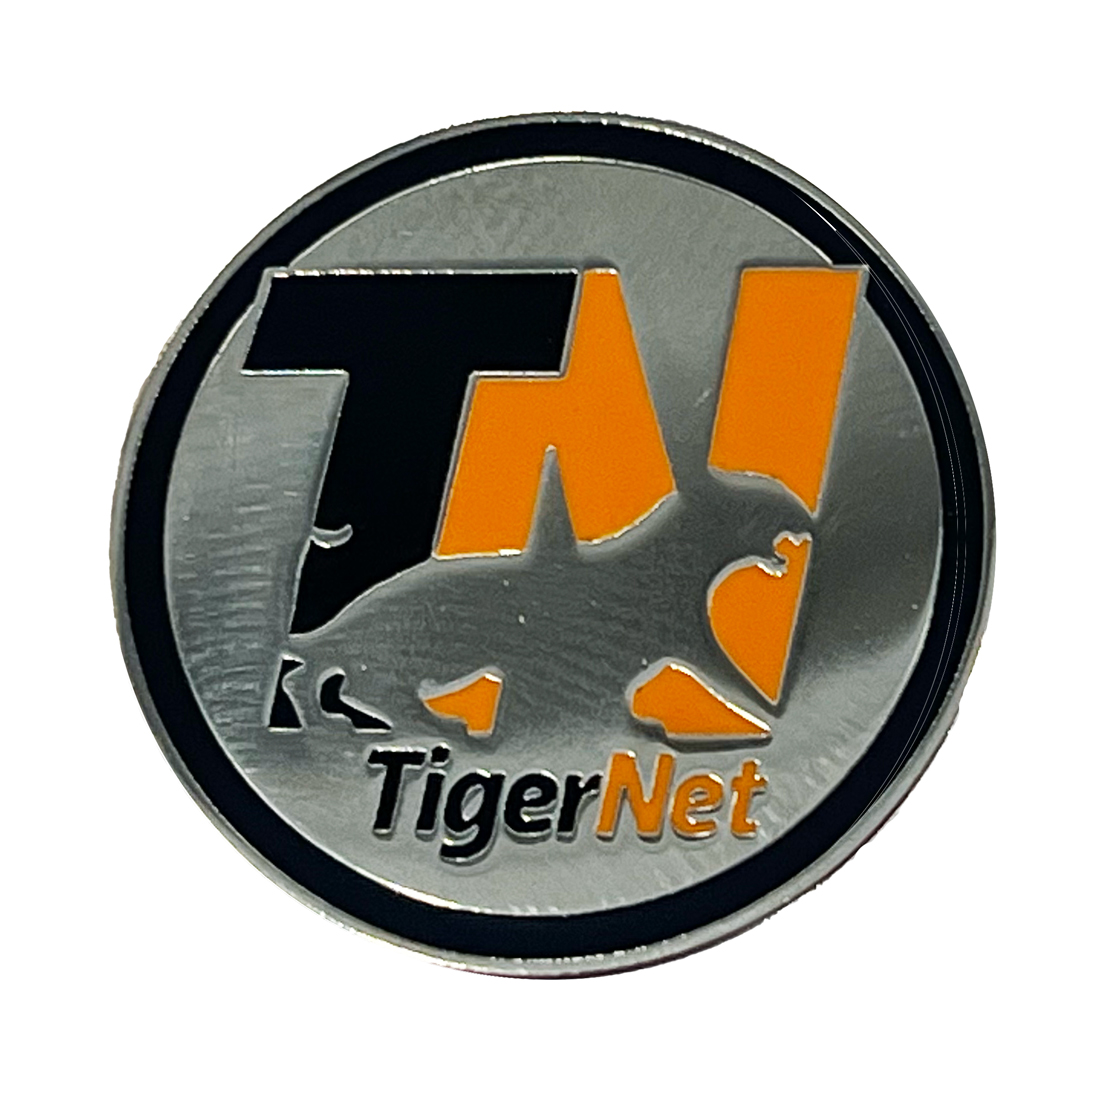 TigerNet 2.0 Event Pin